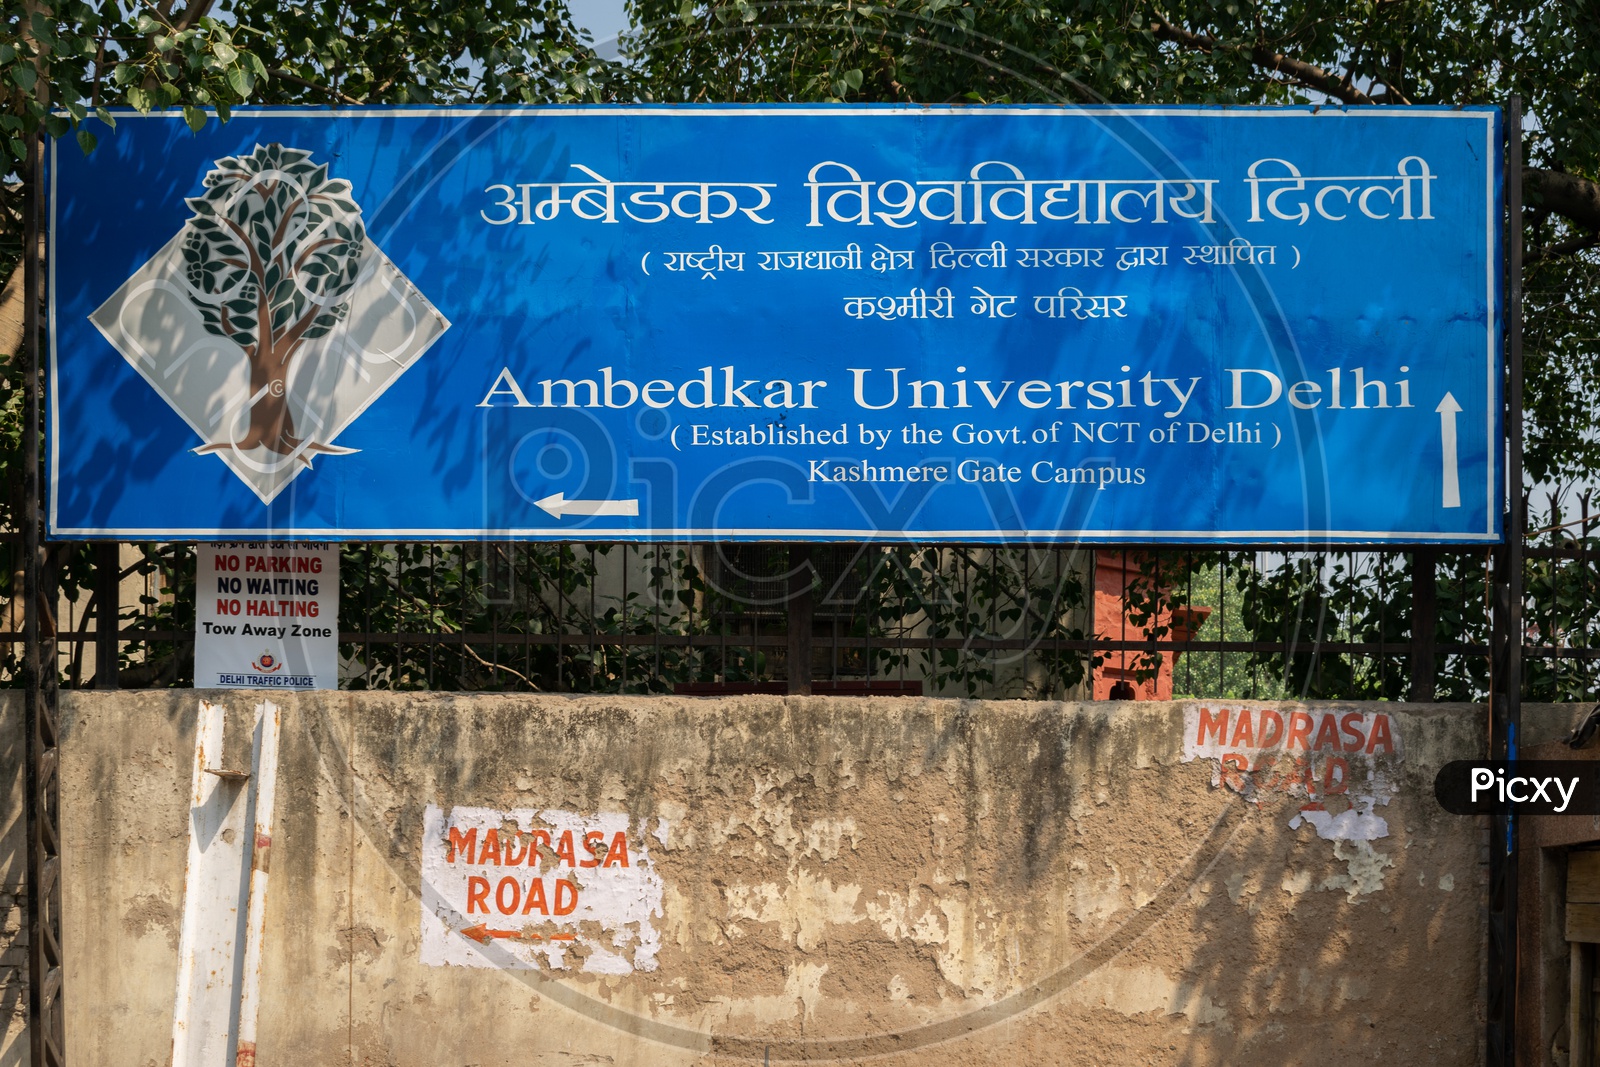 Ambedkar University Delhi